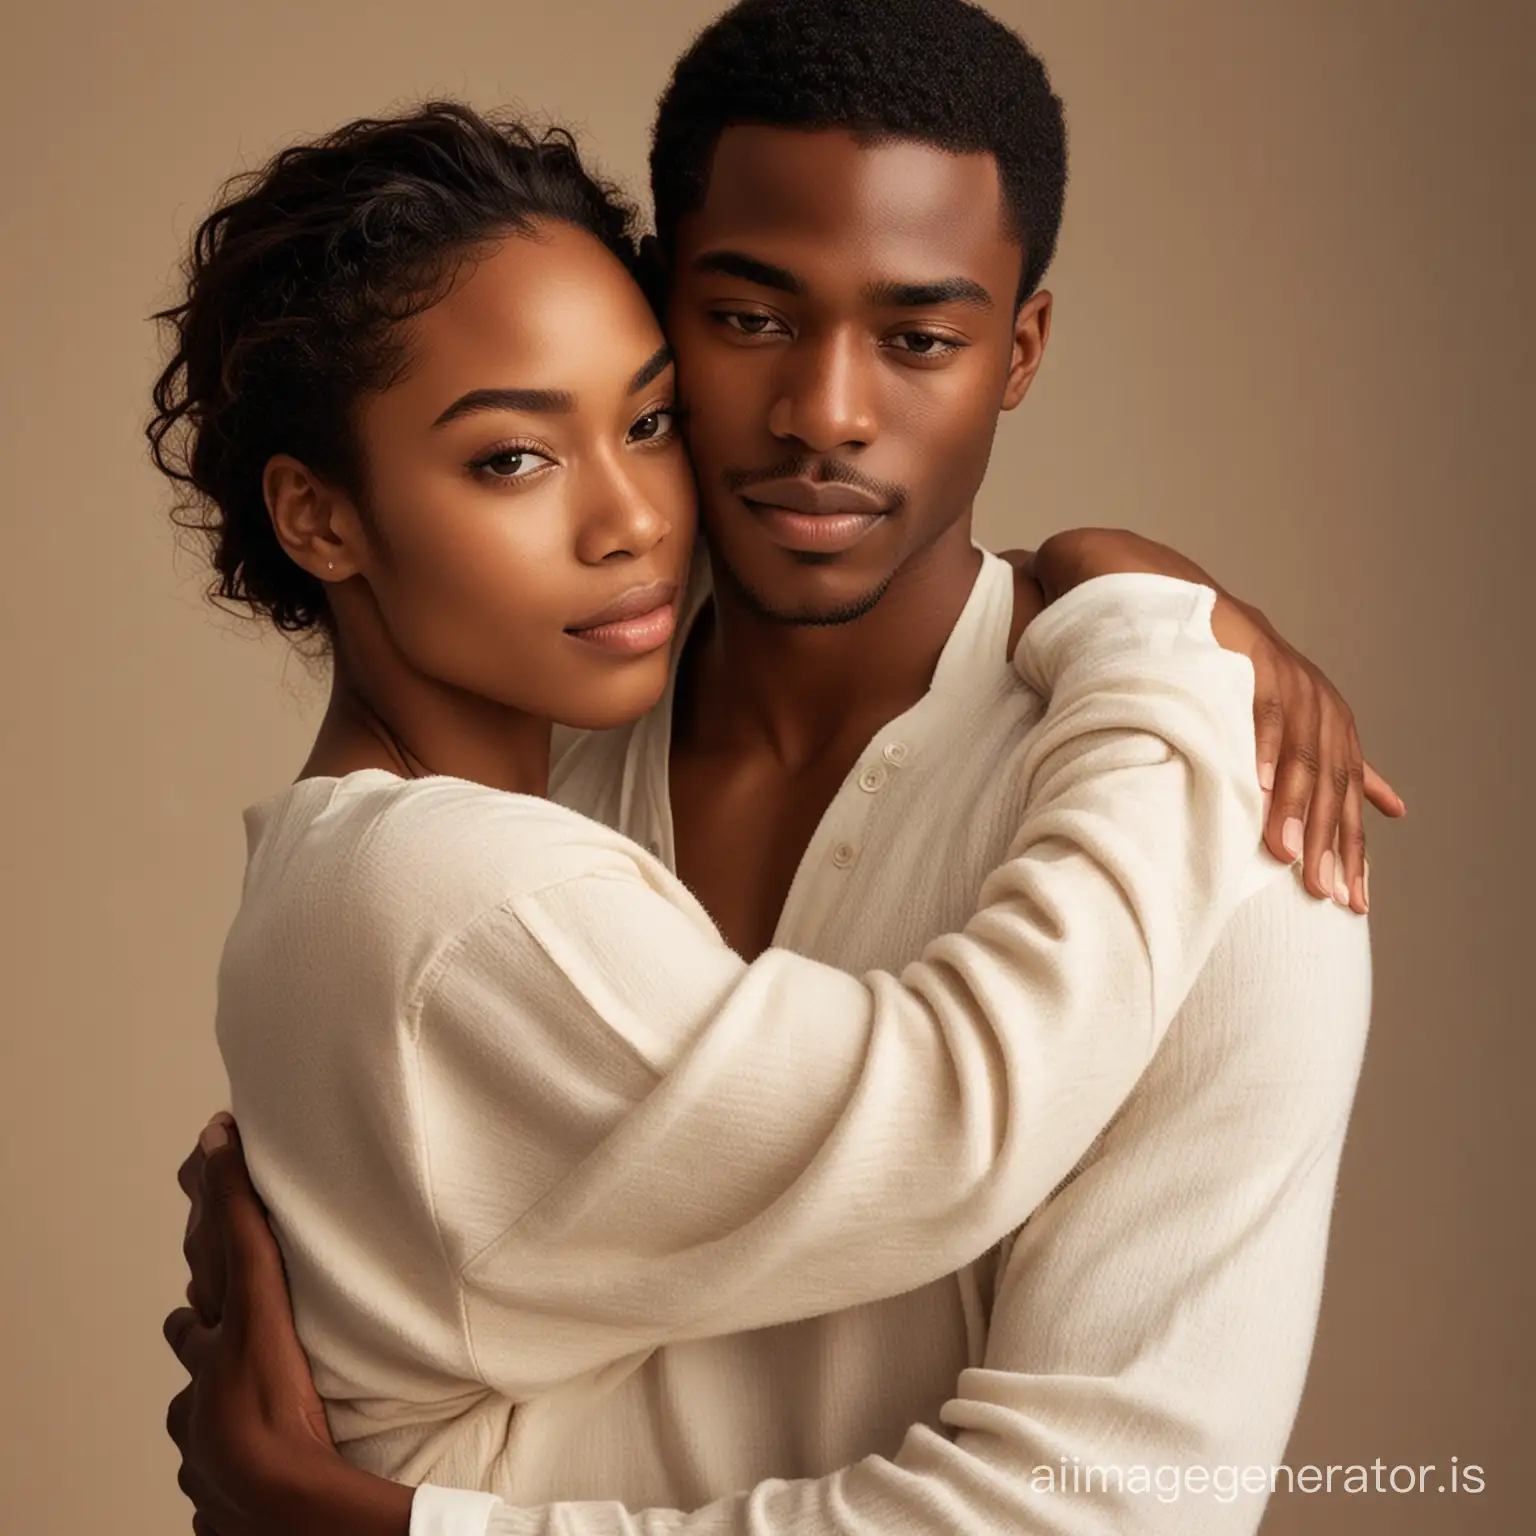 An African American female model hugging an African American male model, wearing intimate clothing